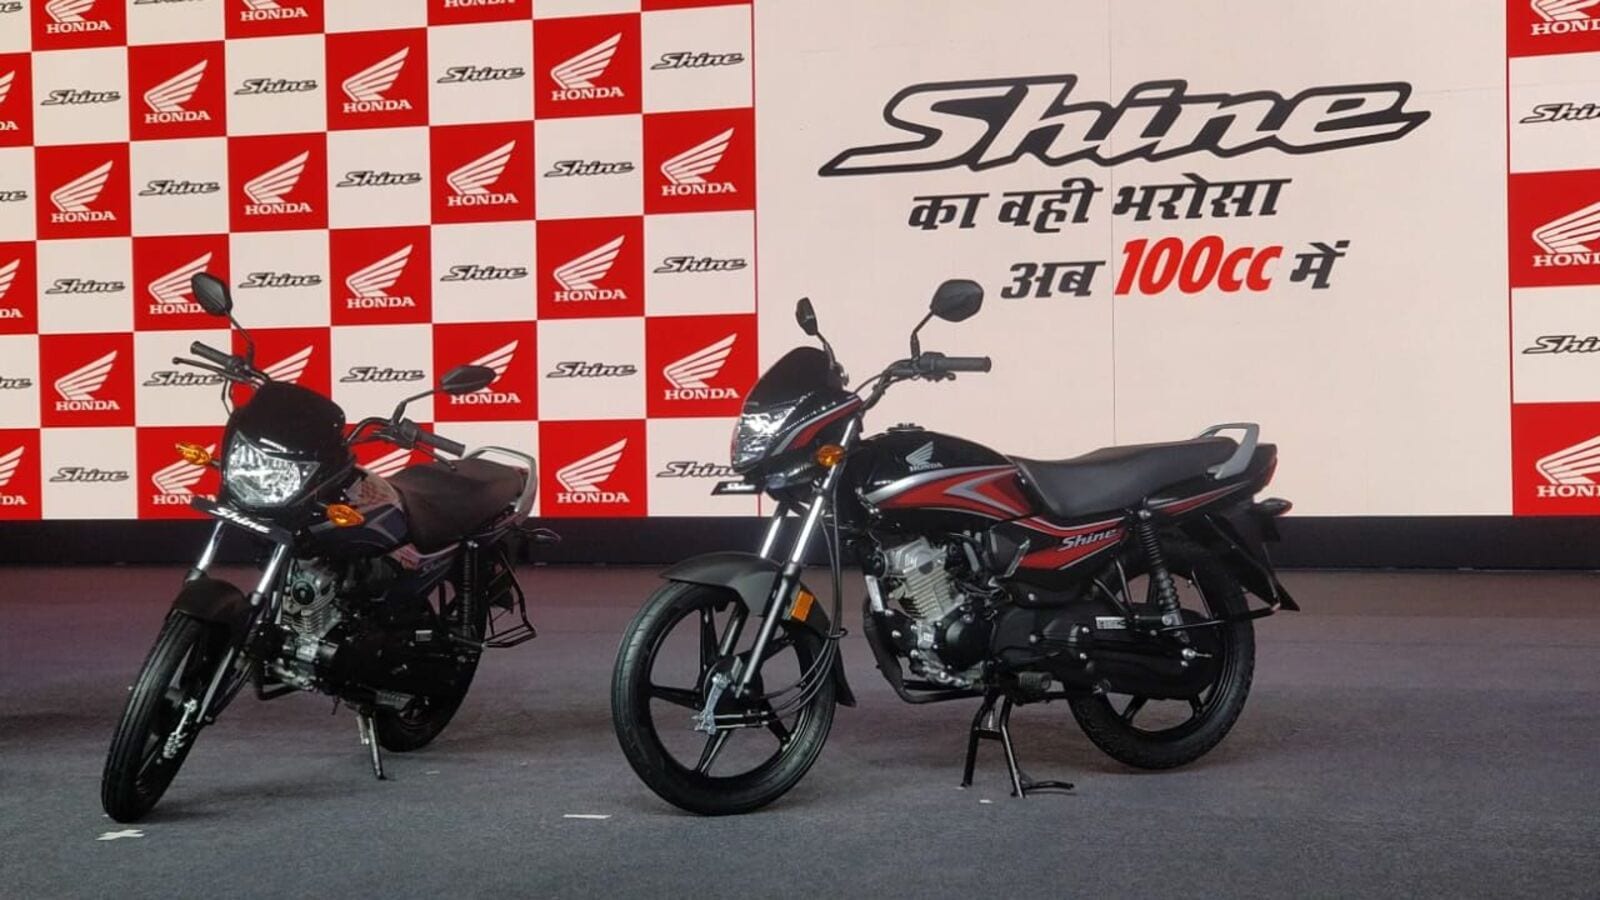 Honda Shine 100 cc launched at ₹64,900, will rival Hero Splendor | HT Auto